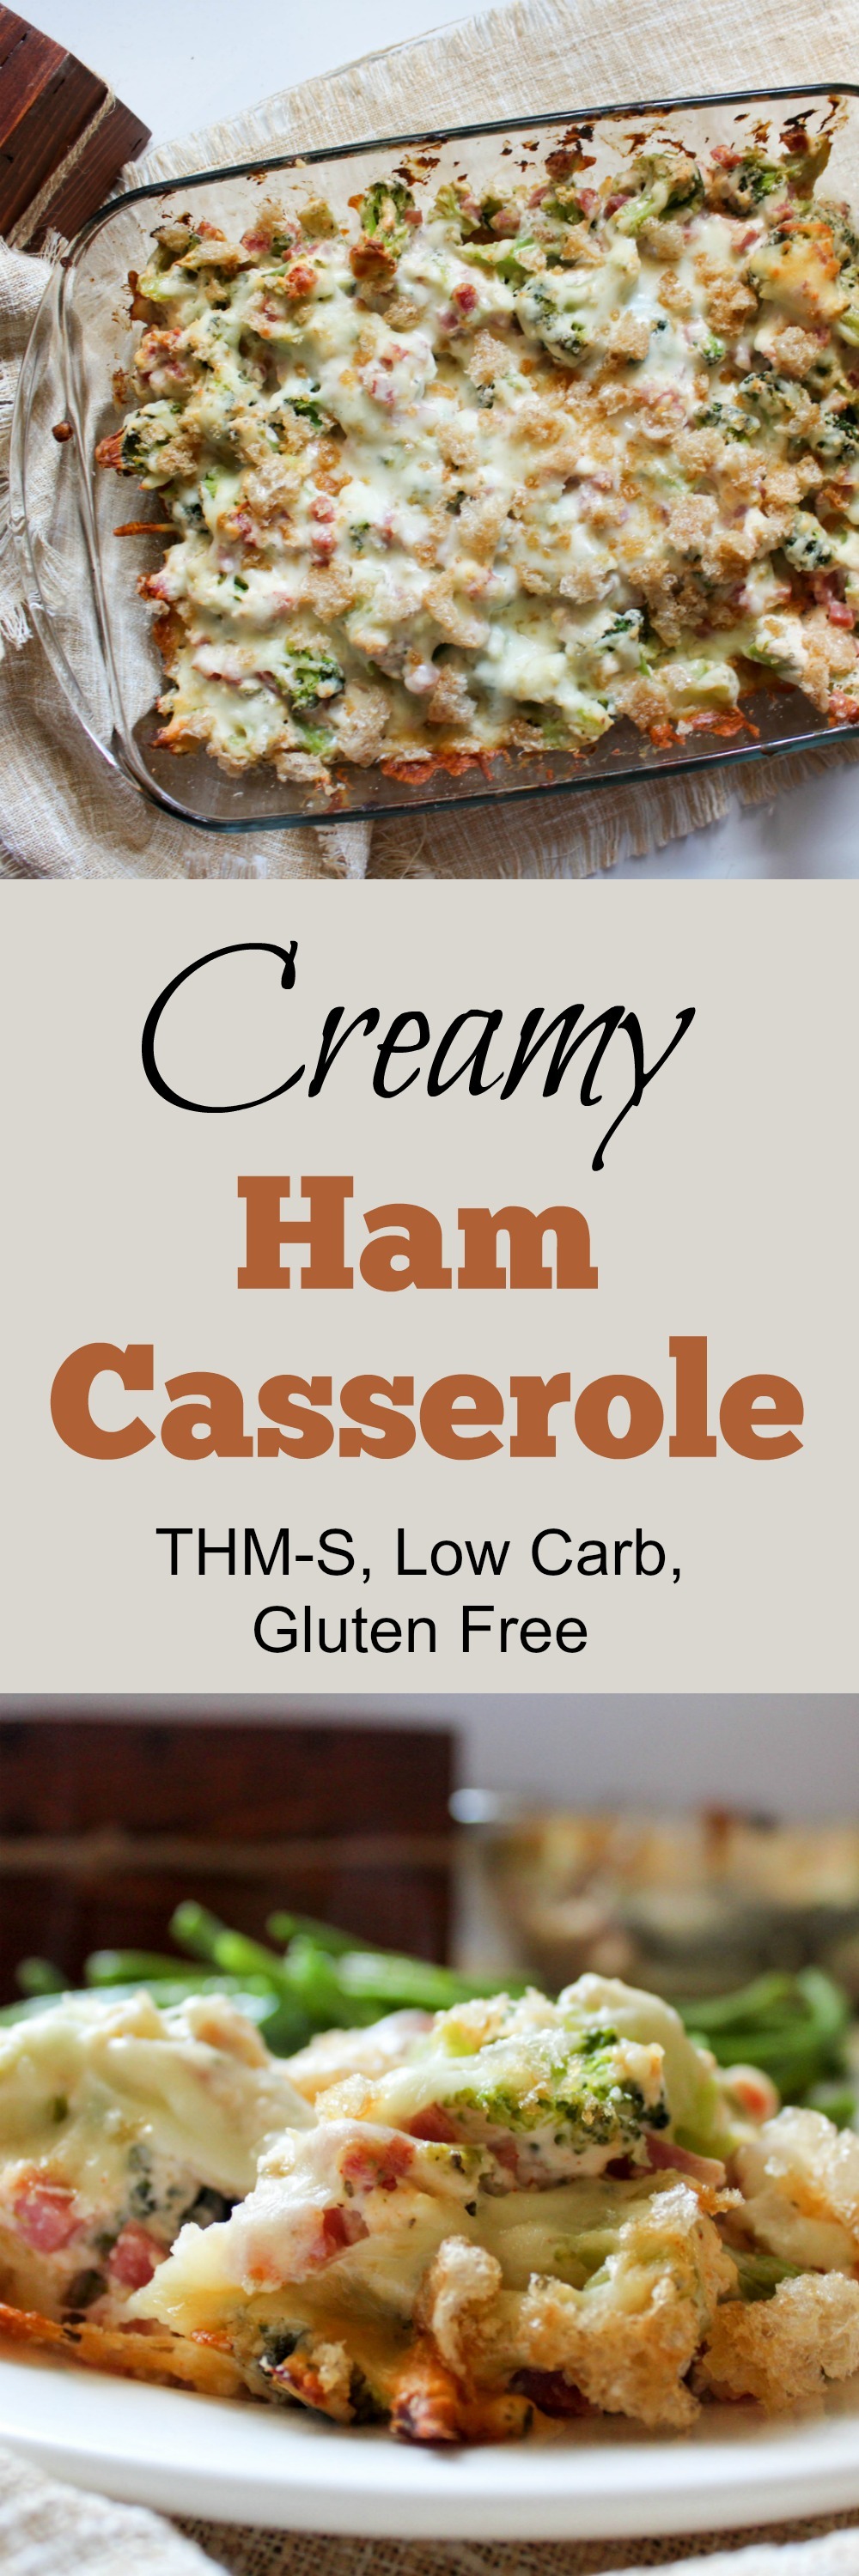 Creamy Ham Casserole (THM-S, Low Carb, Gluten Free)